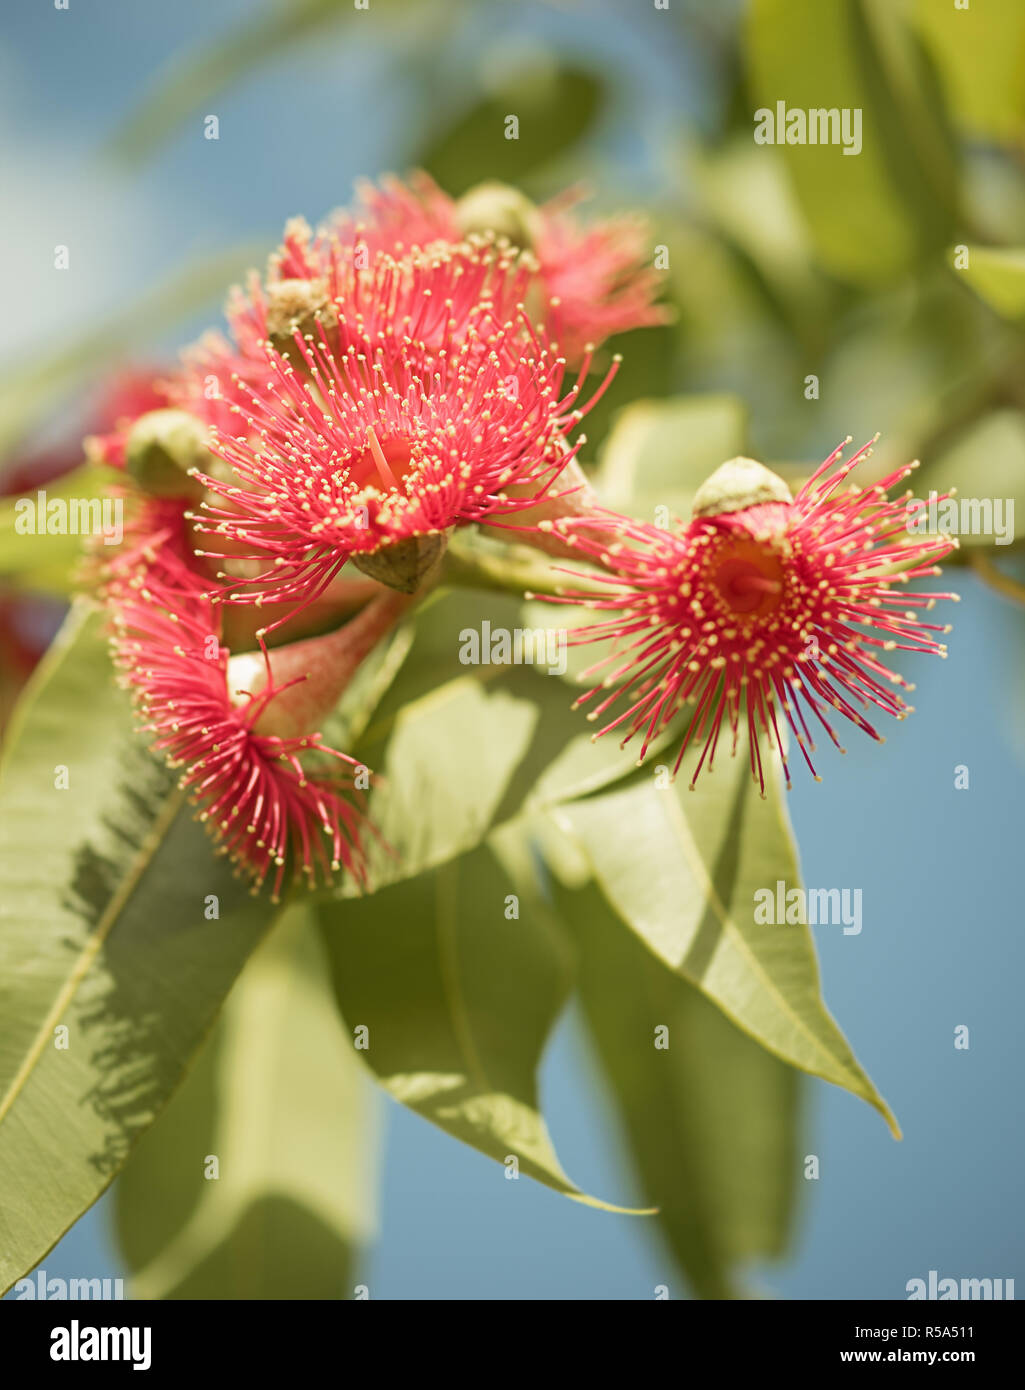 Australian native flowering gum tree Stock Photo